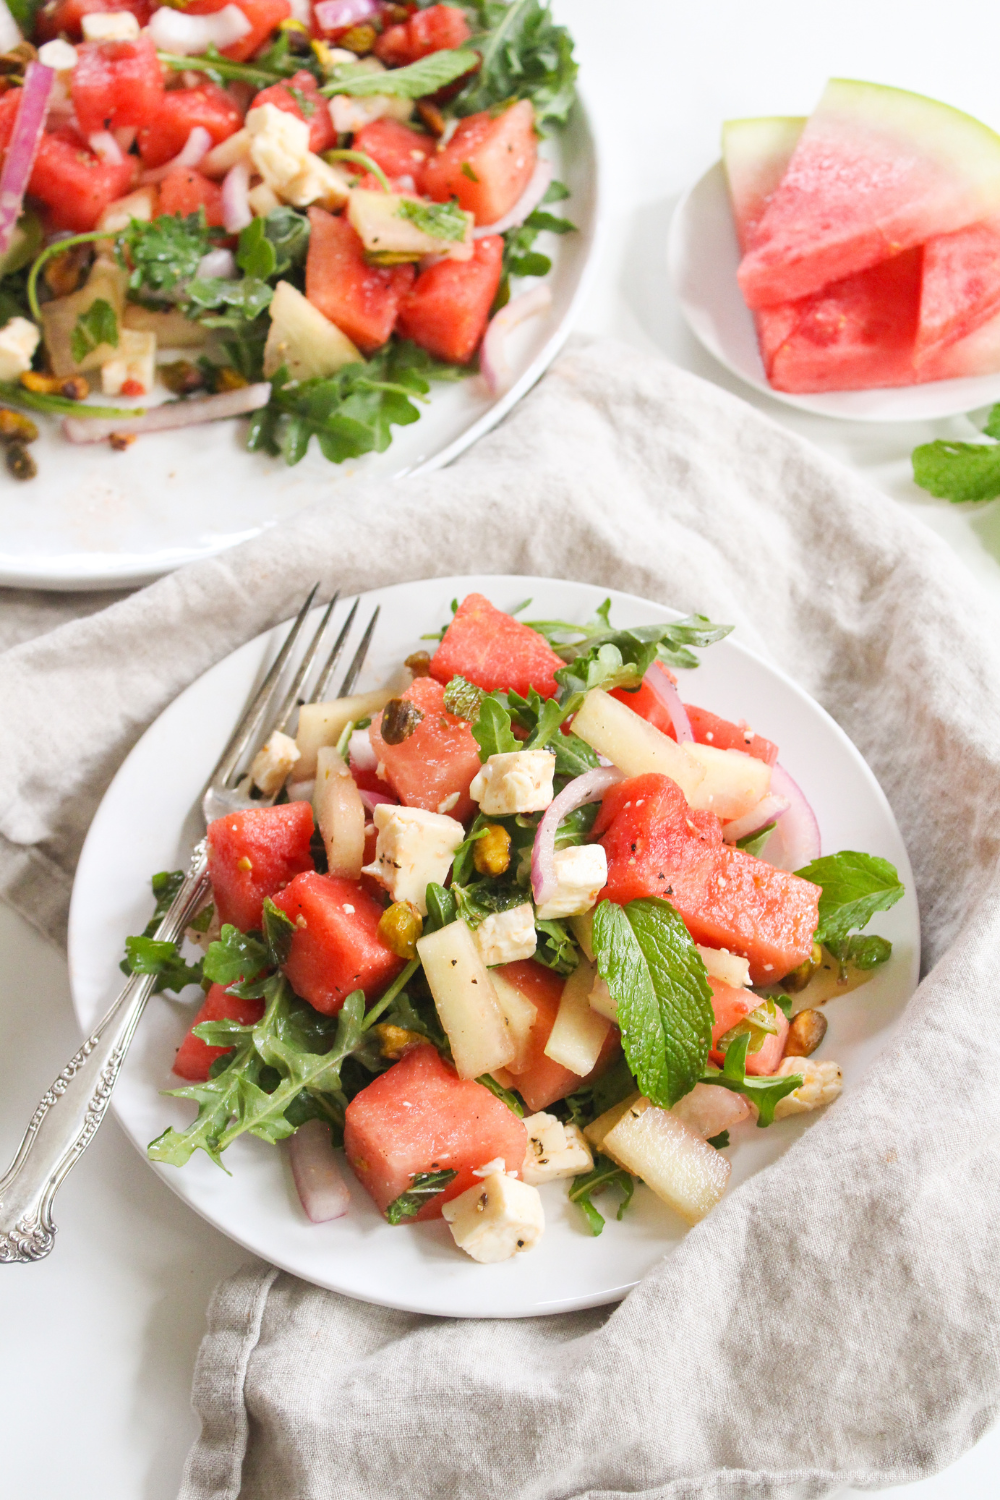 watermelon rind salad with feta and arugula